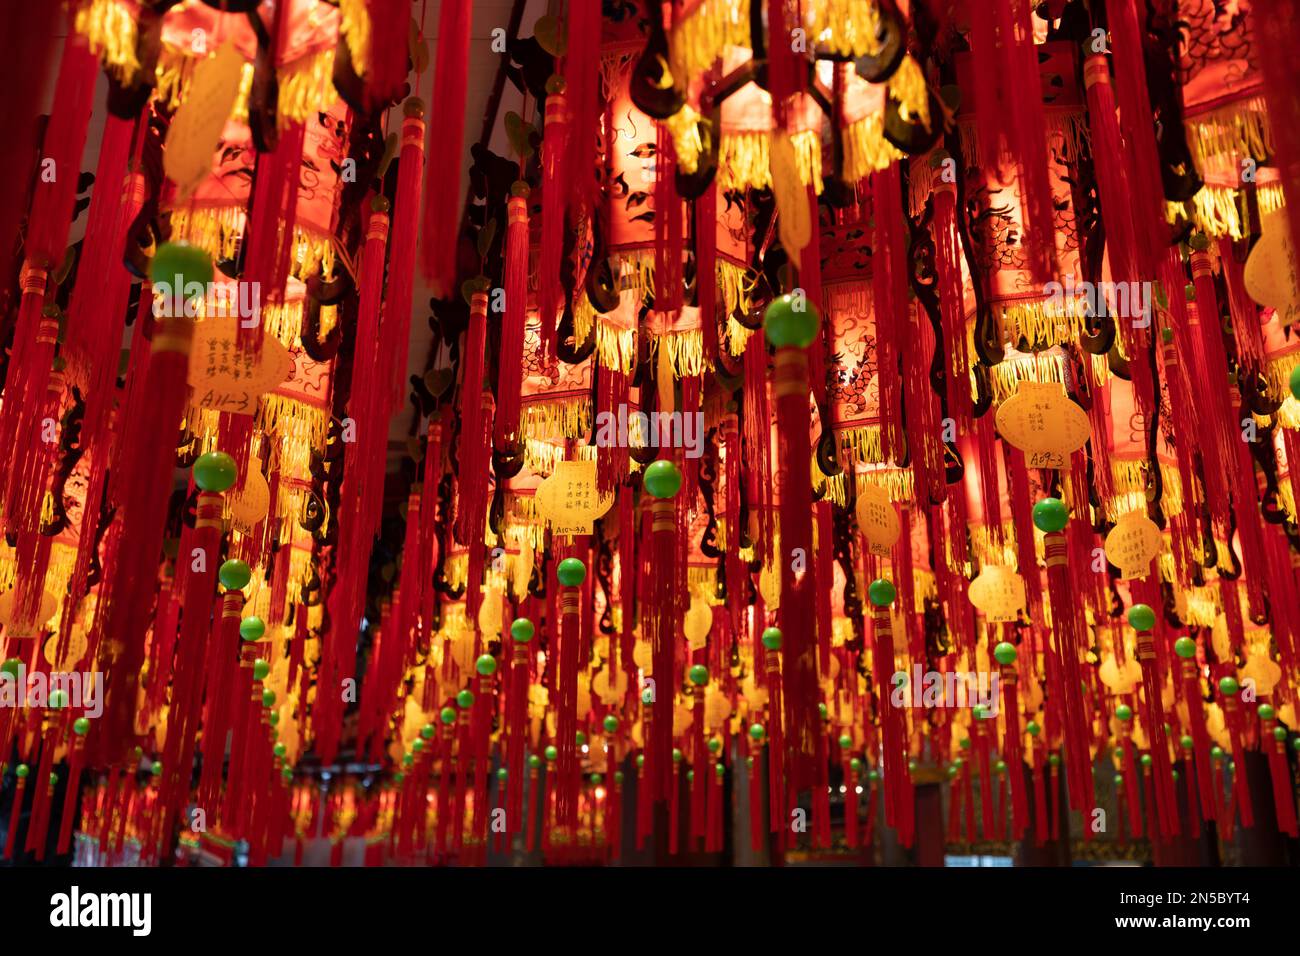 Lanterns with tassels in red and yellow, Taipei Tianhou temple dedicated to Mazu / Matsu, the sea goddess or goddess of seafarers, in Taipei, Taiwan. Stock Photo